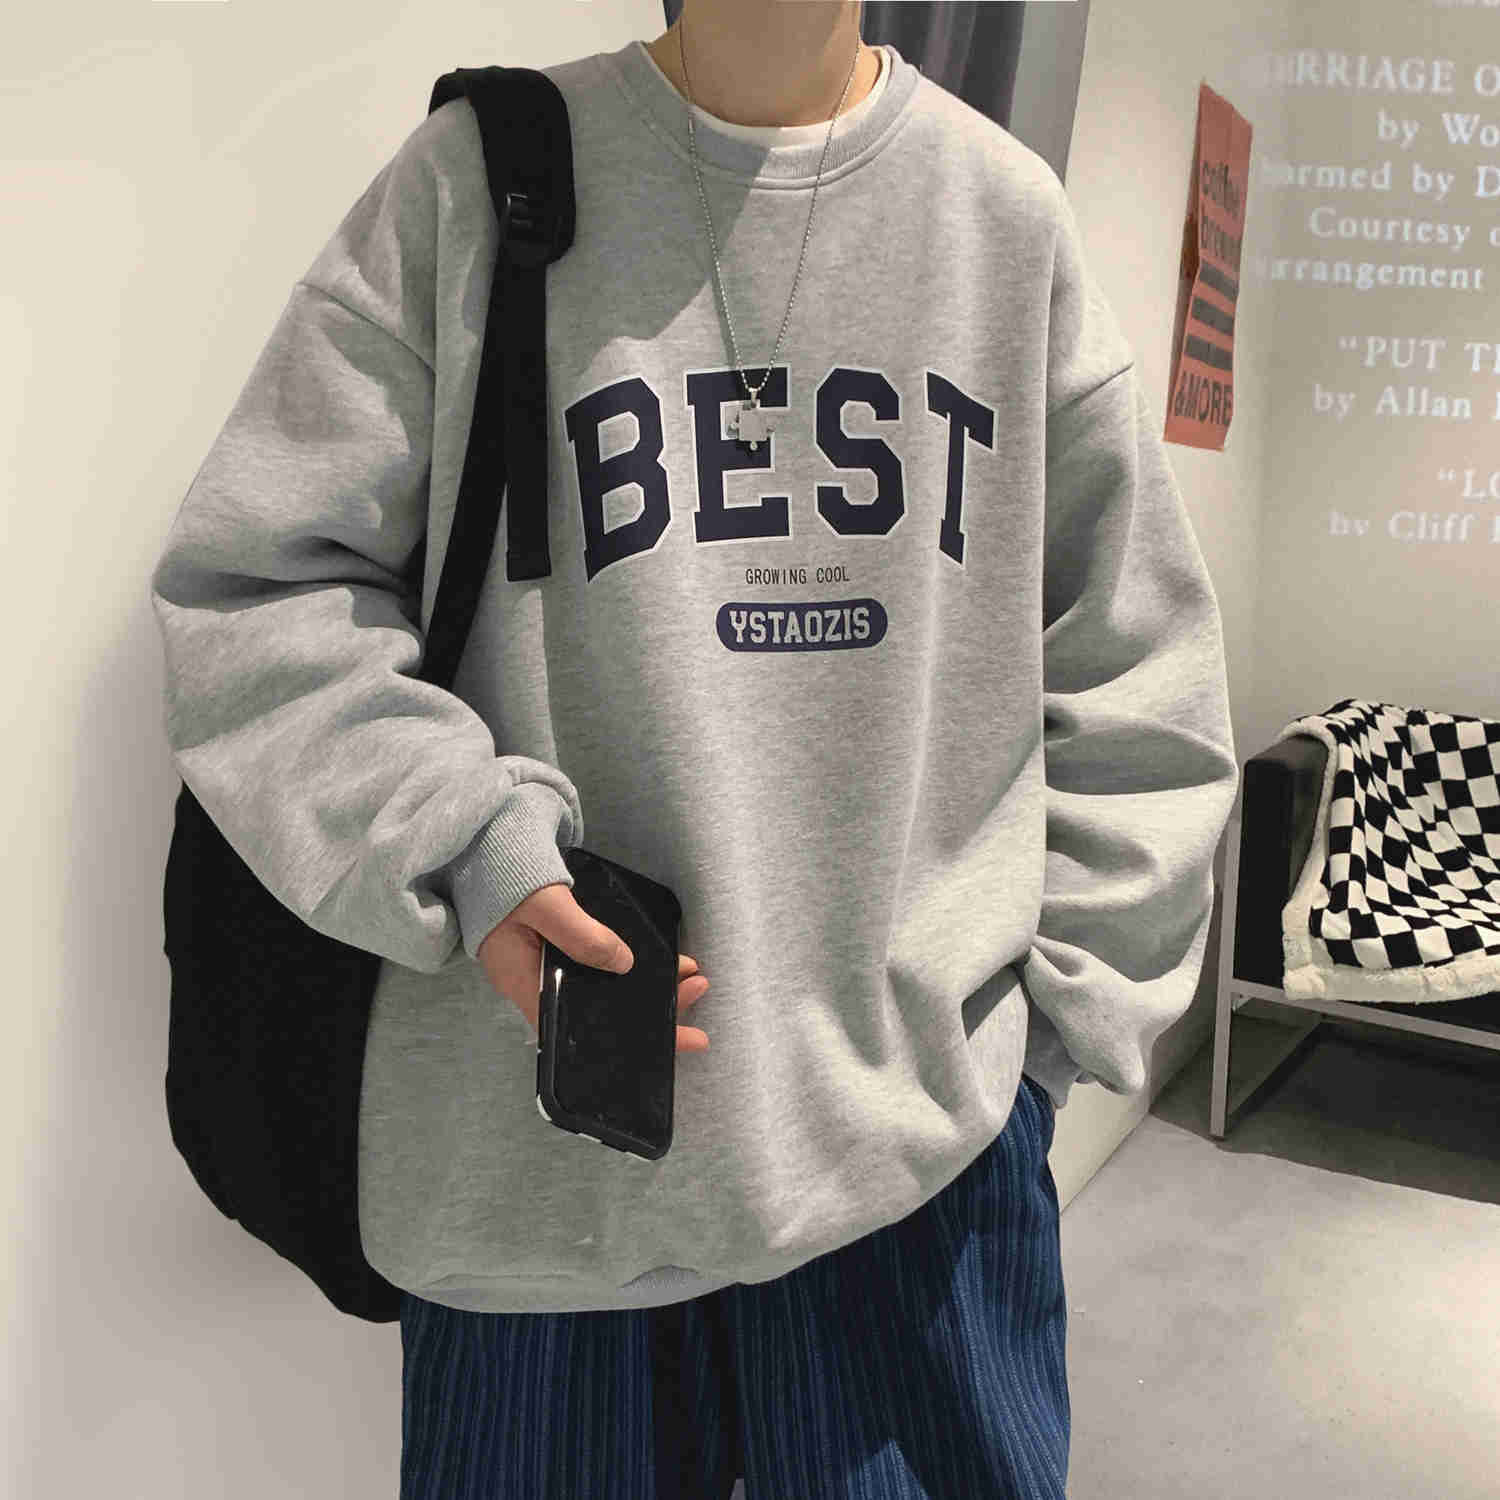 a soft boy wearing a grey aesthetic oversized sweatshirt with a best growing cool ystaozis slogan on